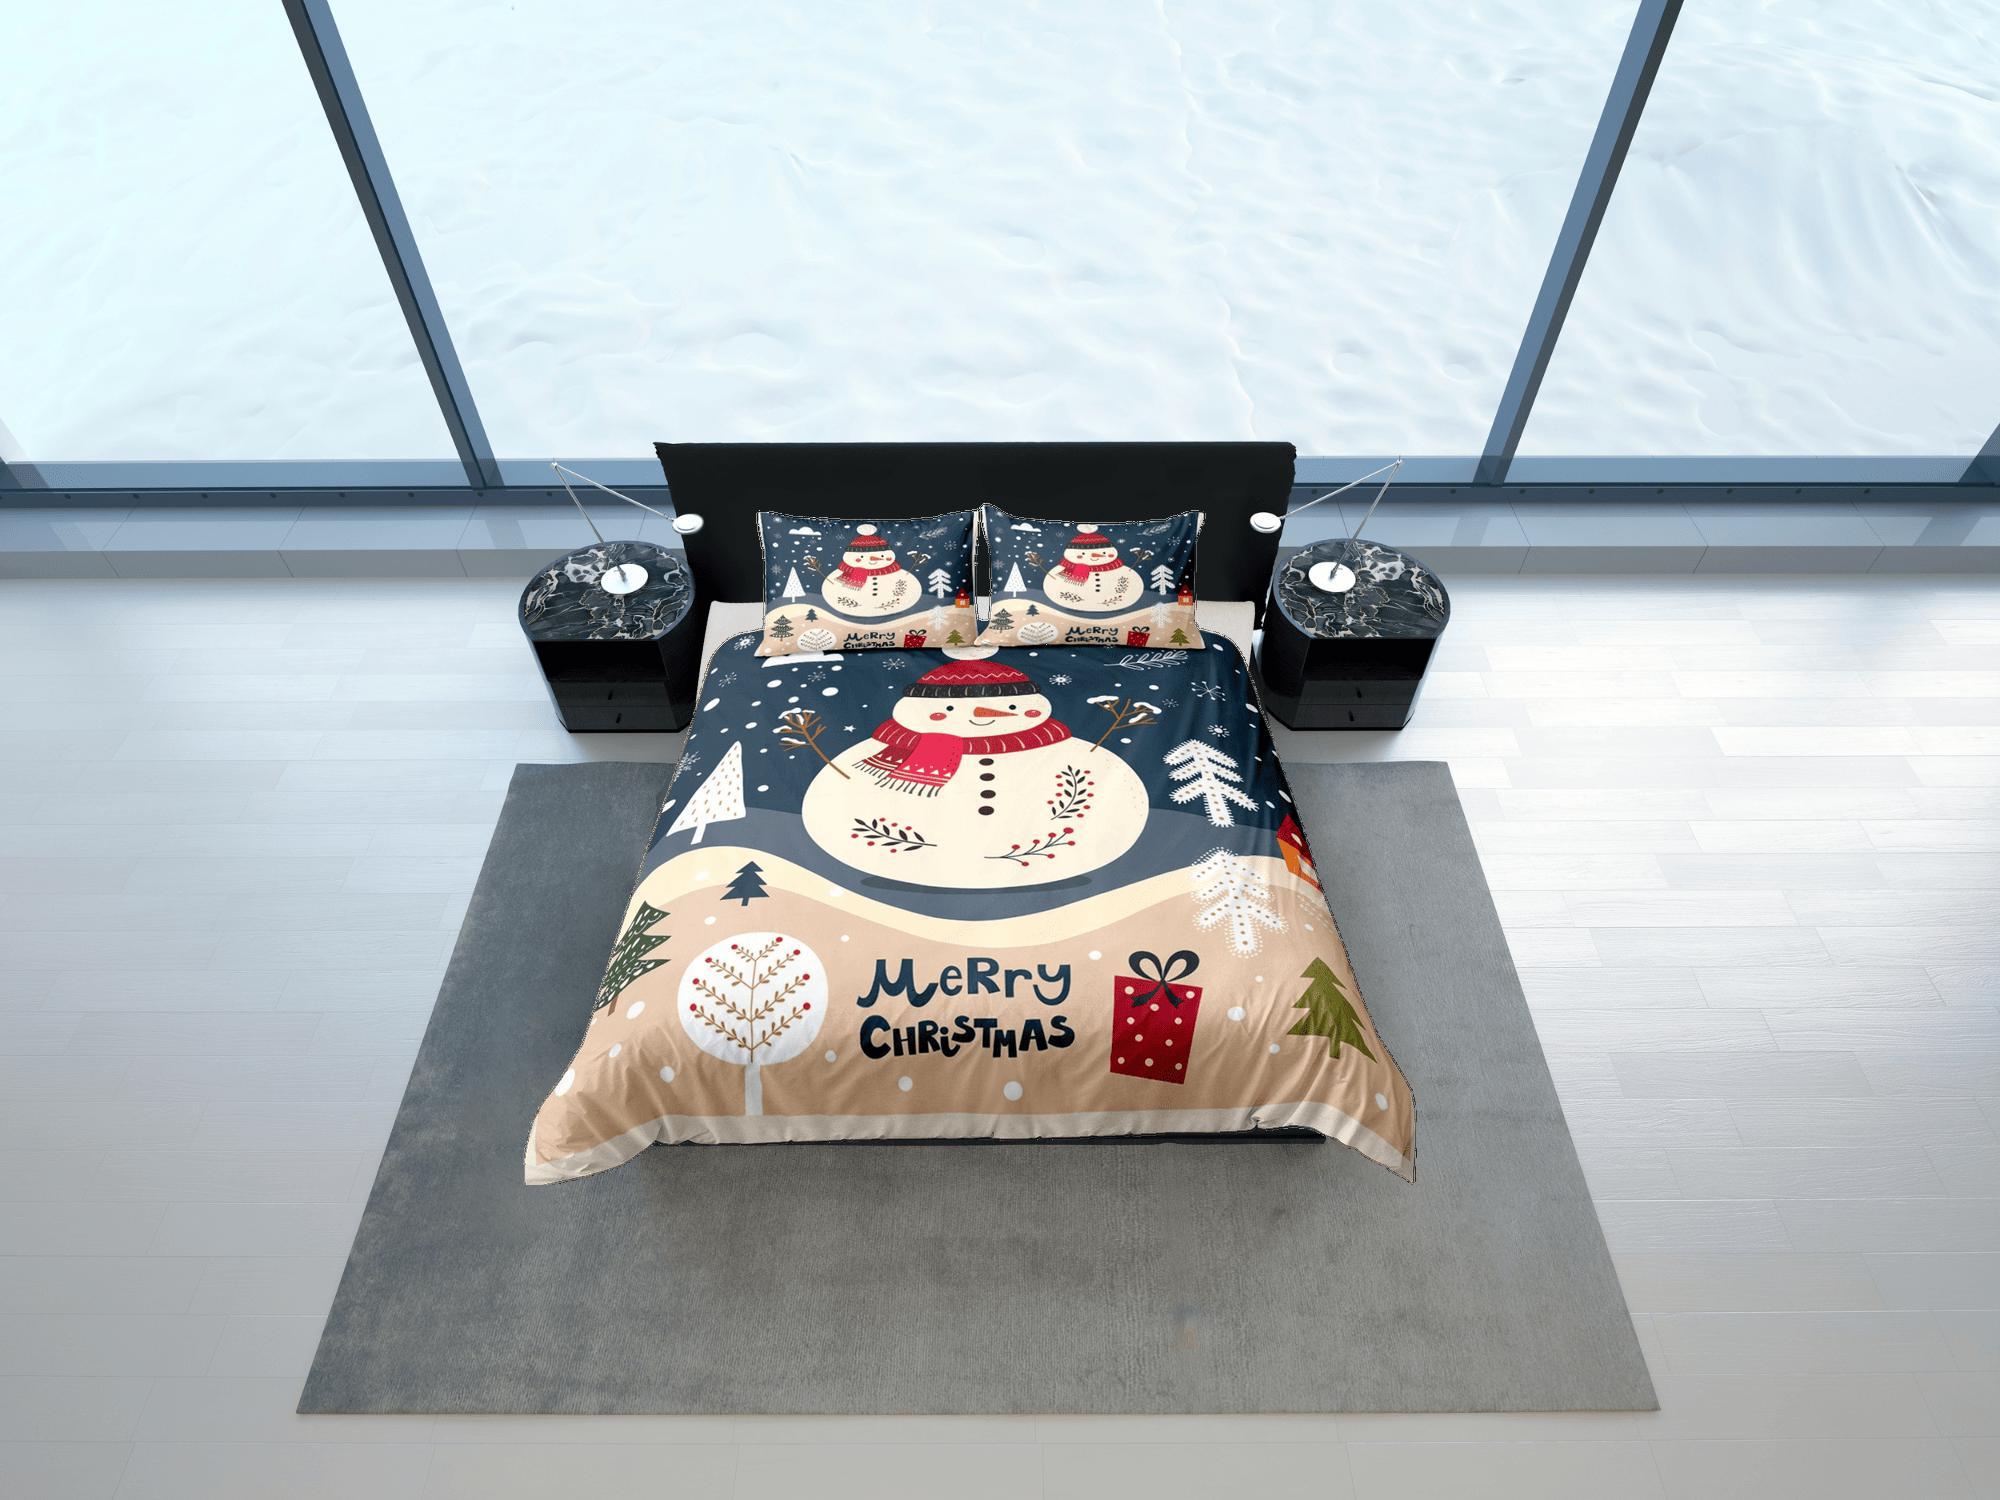 daintyduvet Christmas Duvet Cover Set with Pillows Snow Man Winter Dorm Bedding Comforter Cover Christmas Gift